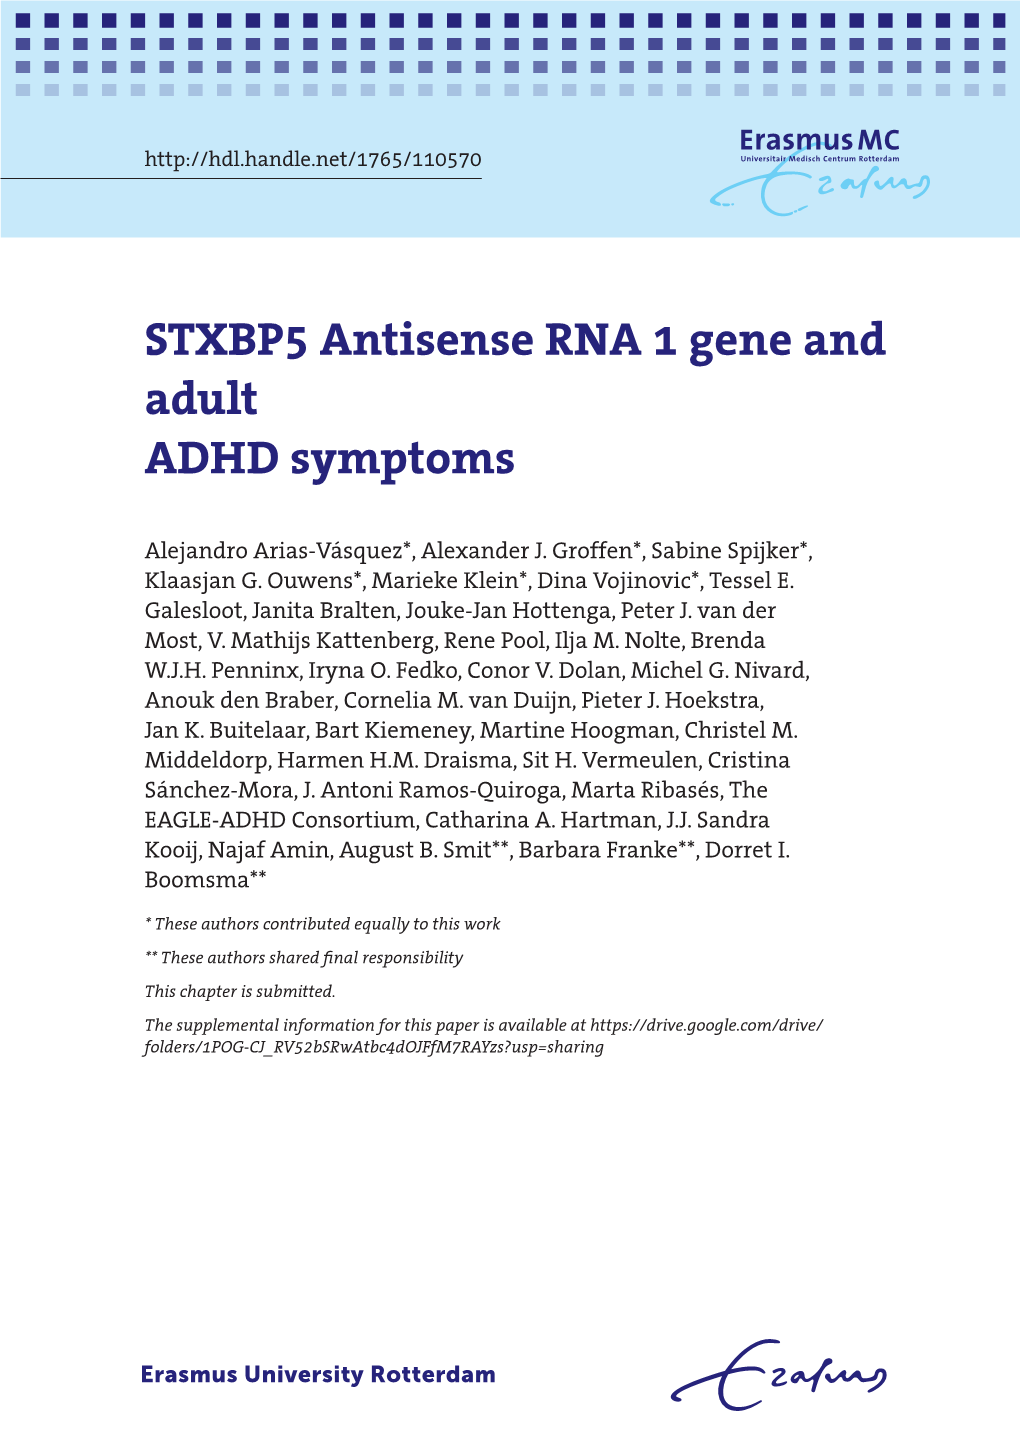 Chapter 4.2 STXBP5 Antisense Antisense RNA 1 Gene and RNA Adult 1 Gene and Adultadhd Symptoms Adhdalejandro Arias-Vásquez*, Symptoms Alexander J